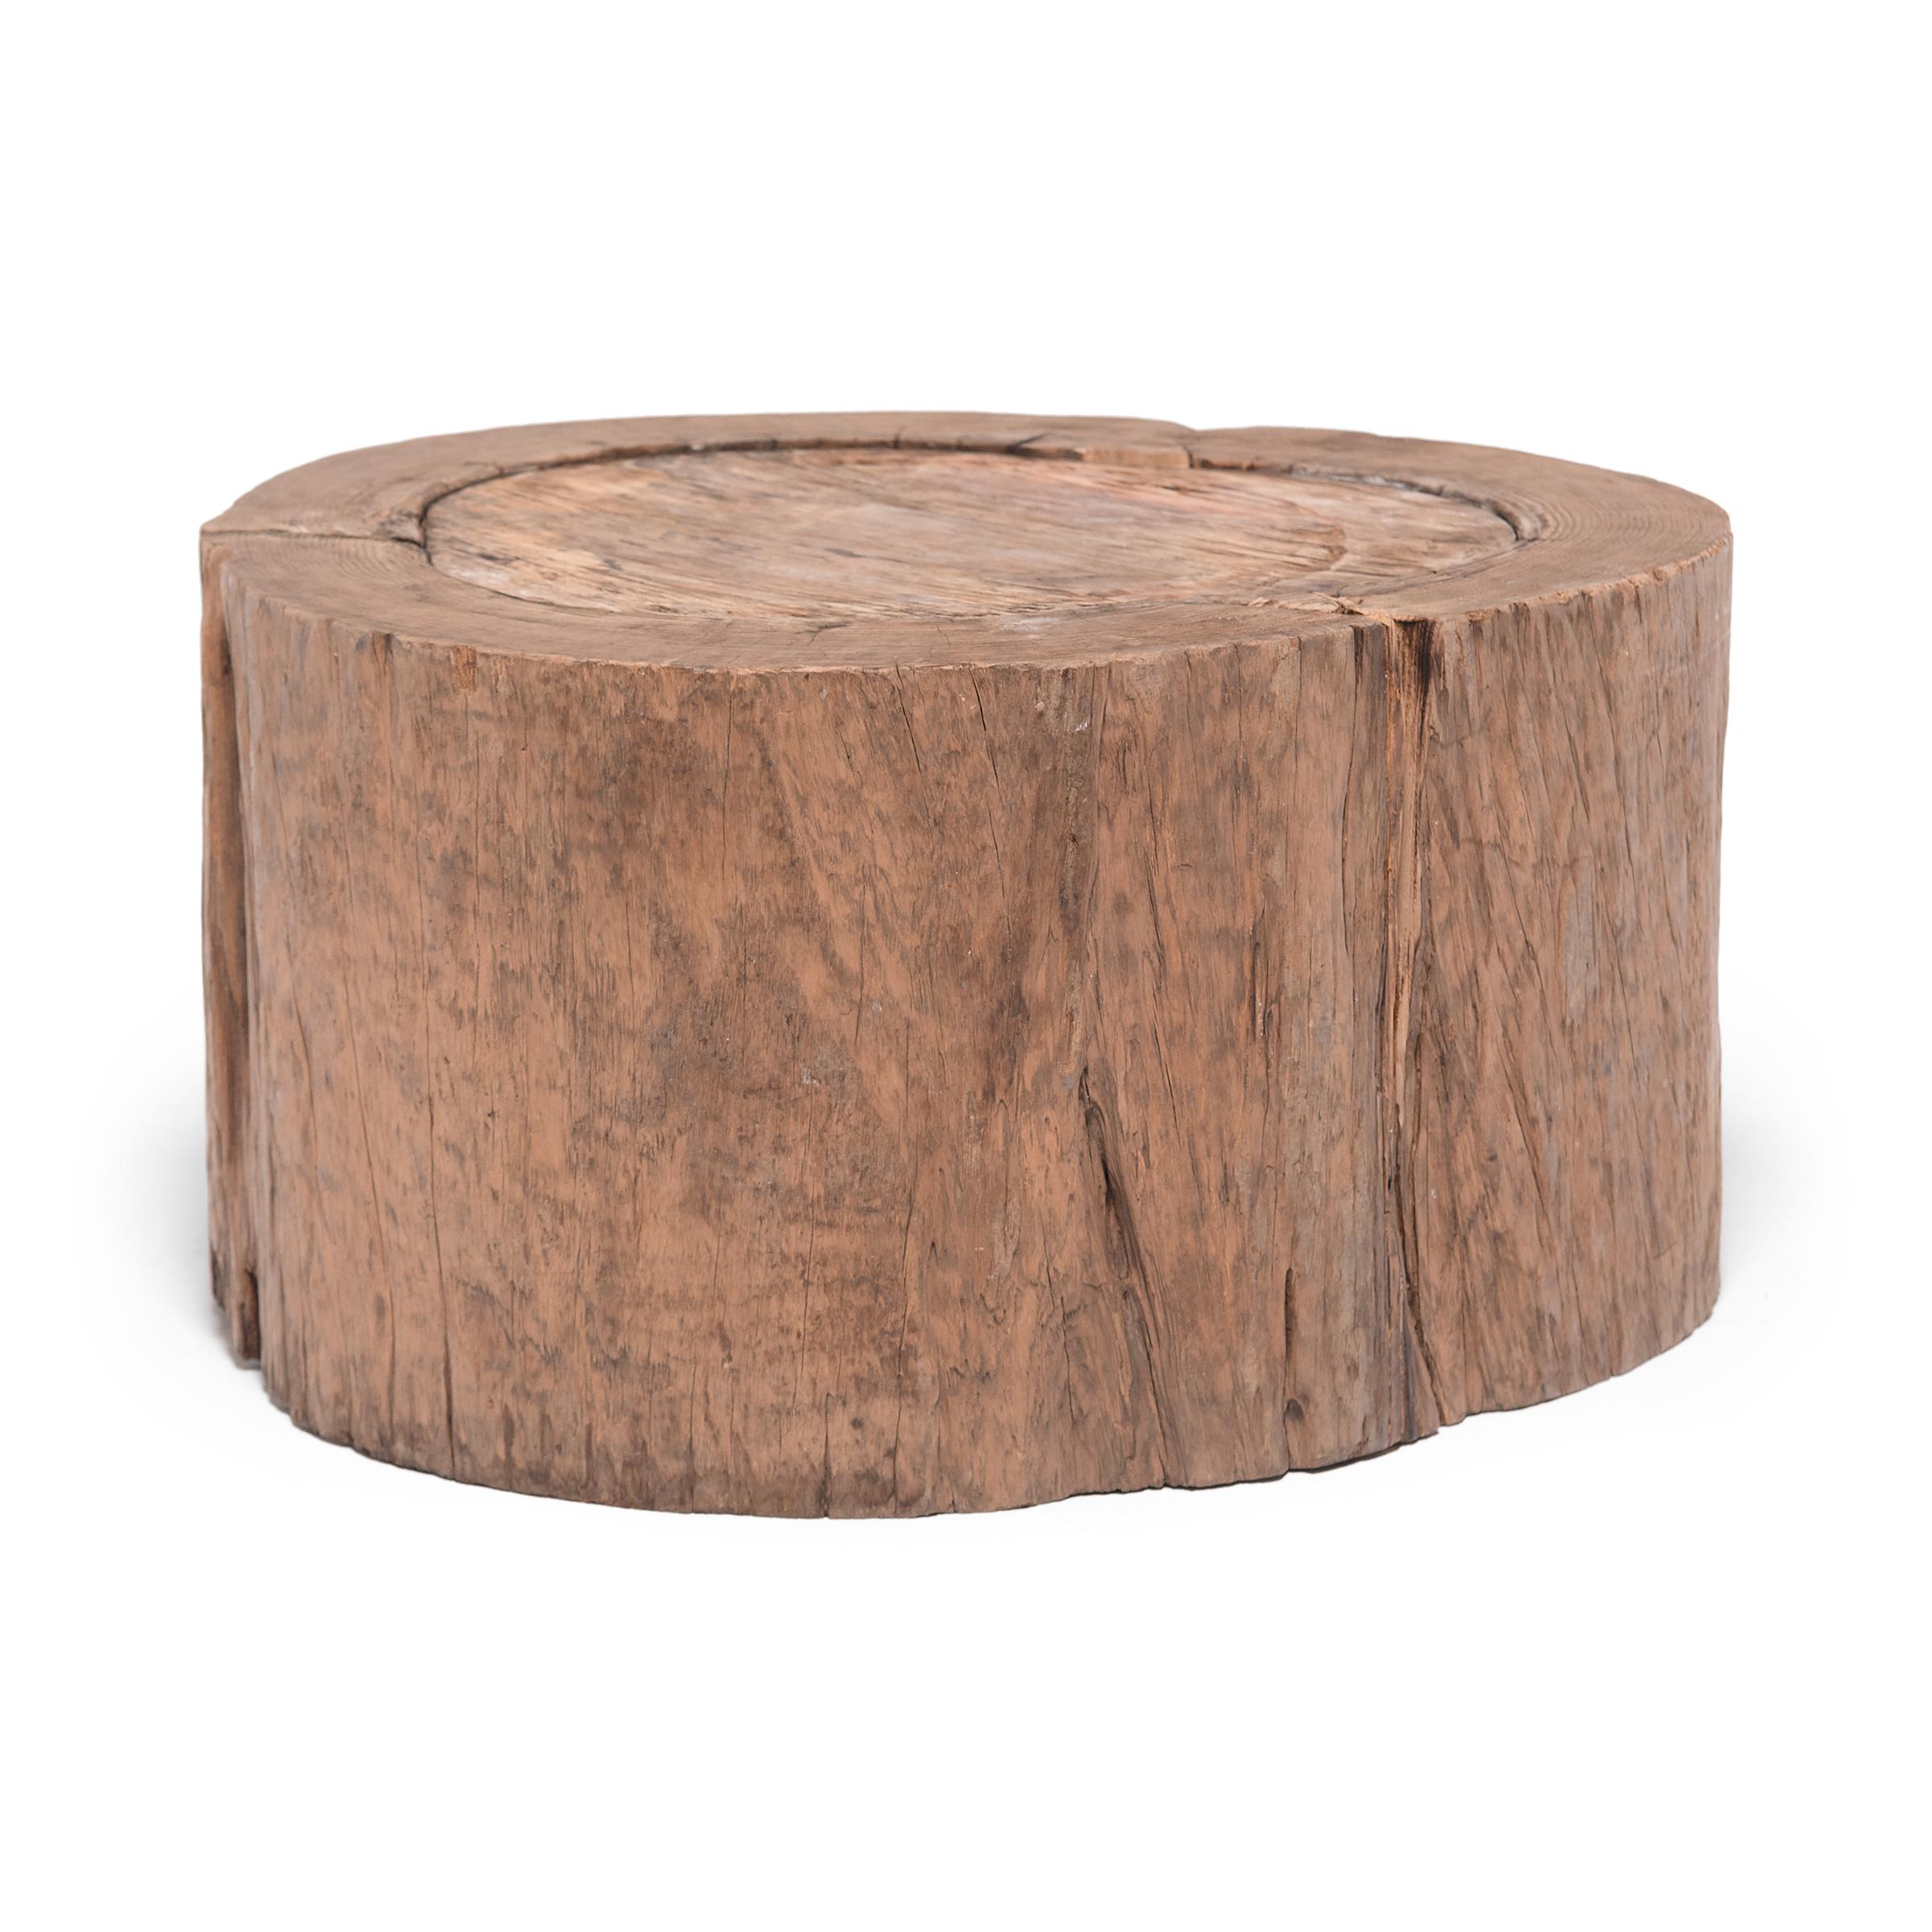 Organic Modern Round Organic Stump Table, circa 1850